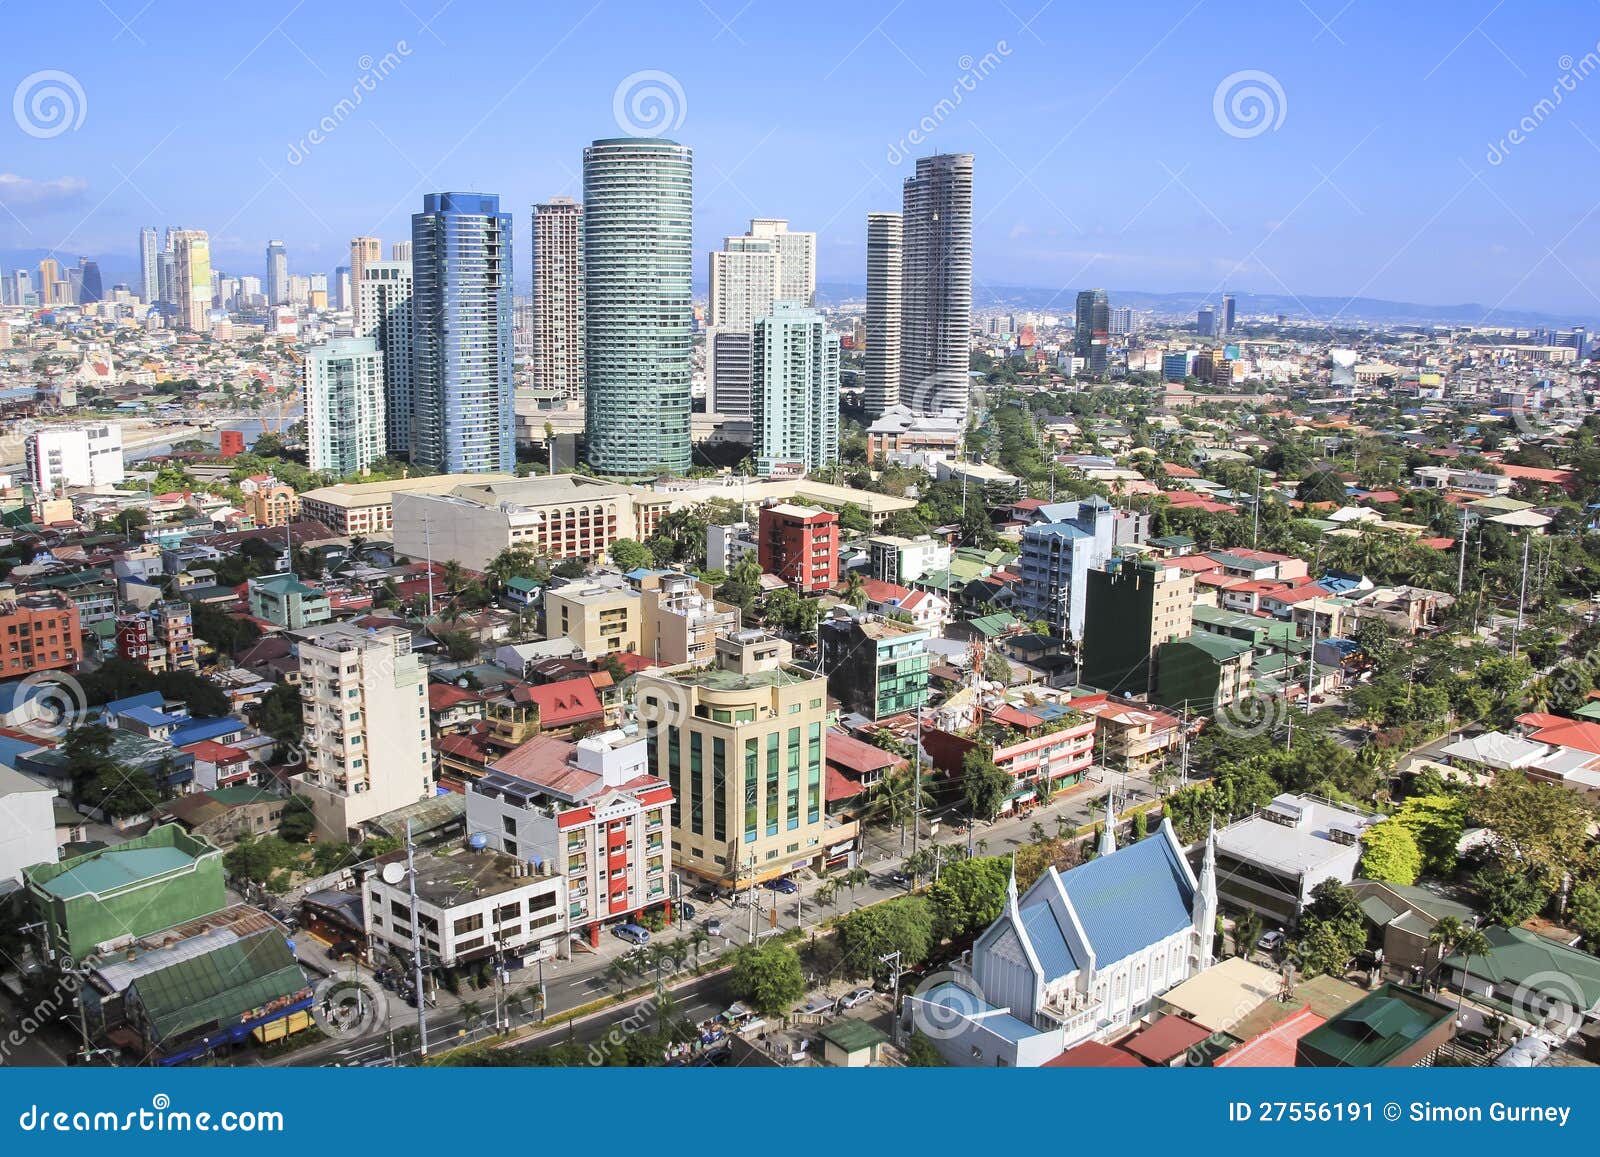 rockwell skyline makati city manila philippines